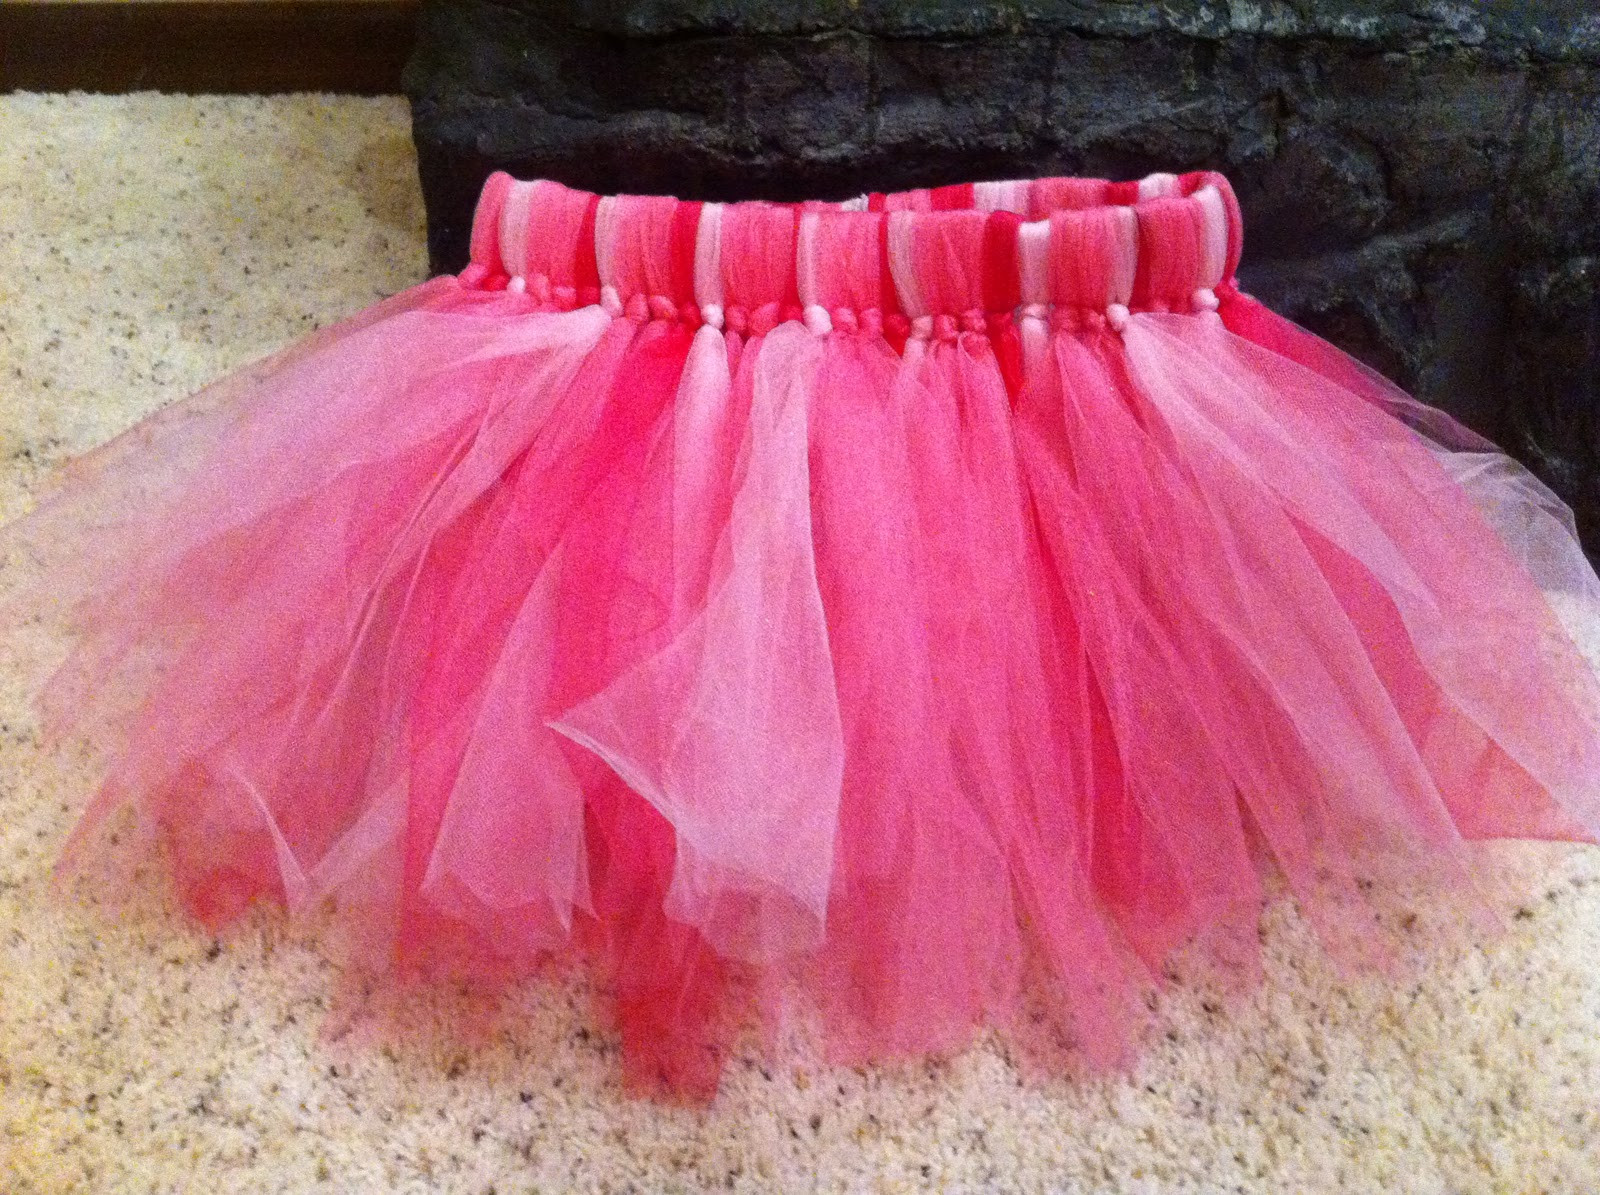 DIY Tutu Skirt For Toddler
 DIY Valentine s Day Projects Handmade Tulle Skirt for $7